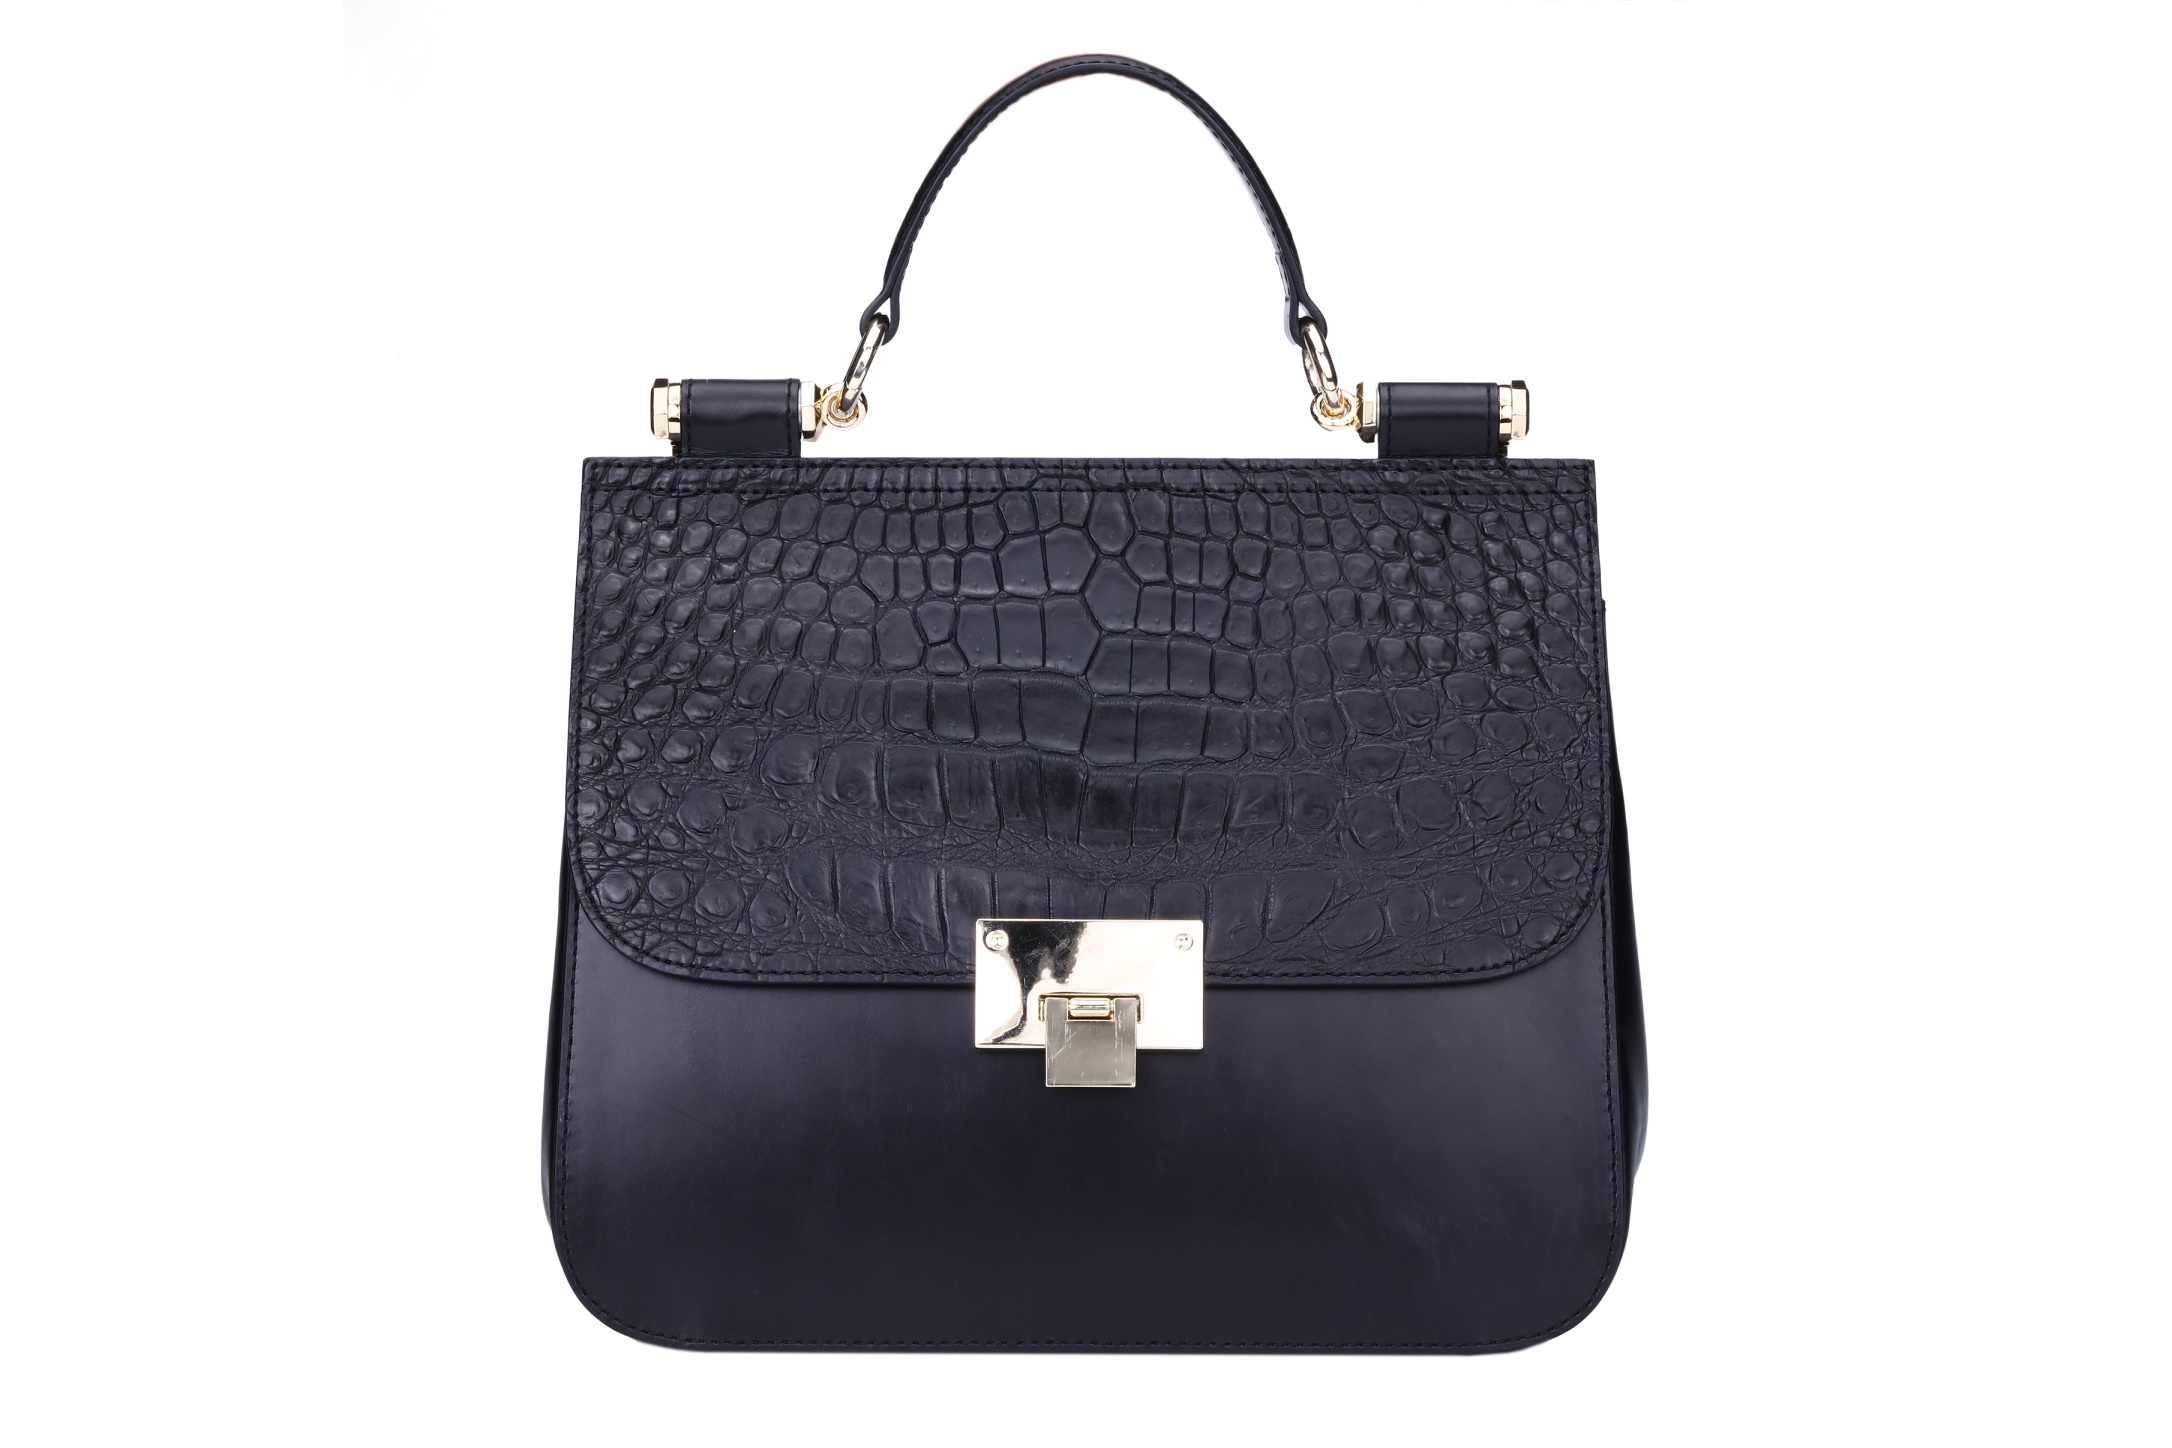 Handbag top handle crocodile leather pattern cover with metal lock